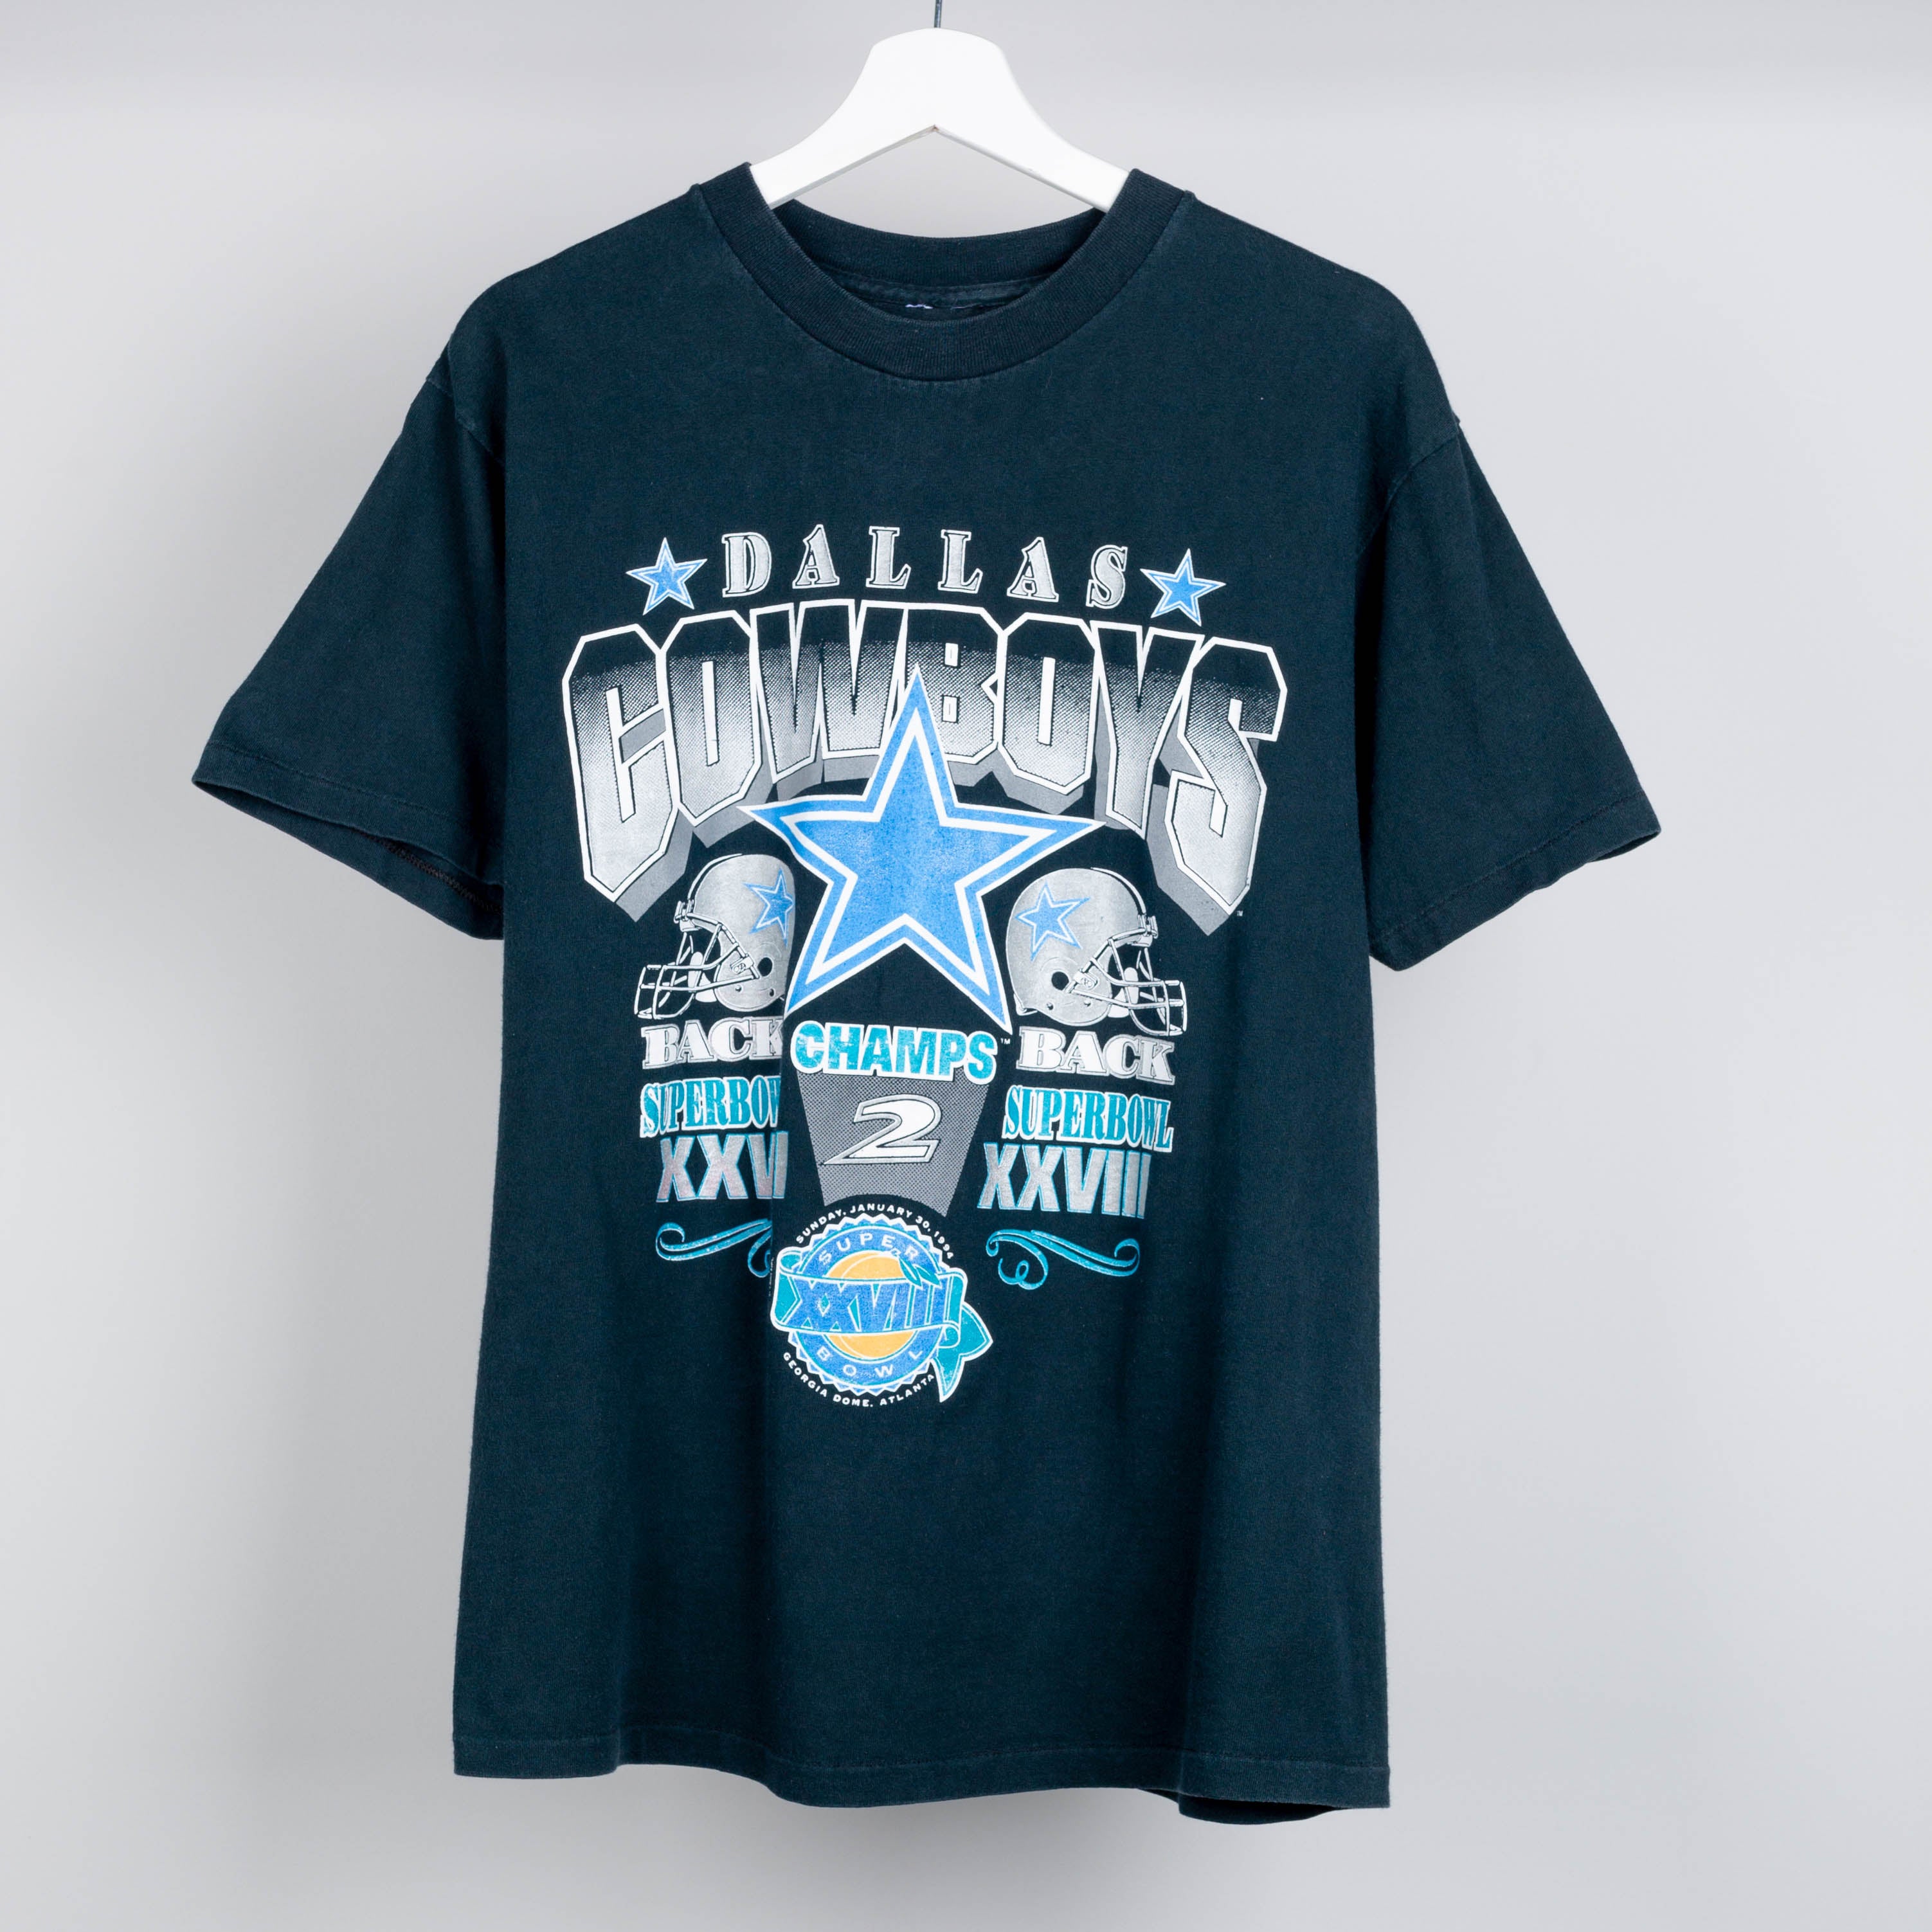 1993 Super Bowl Dallas Cowboys T-Shirt Size L